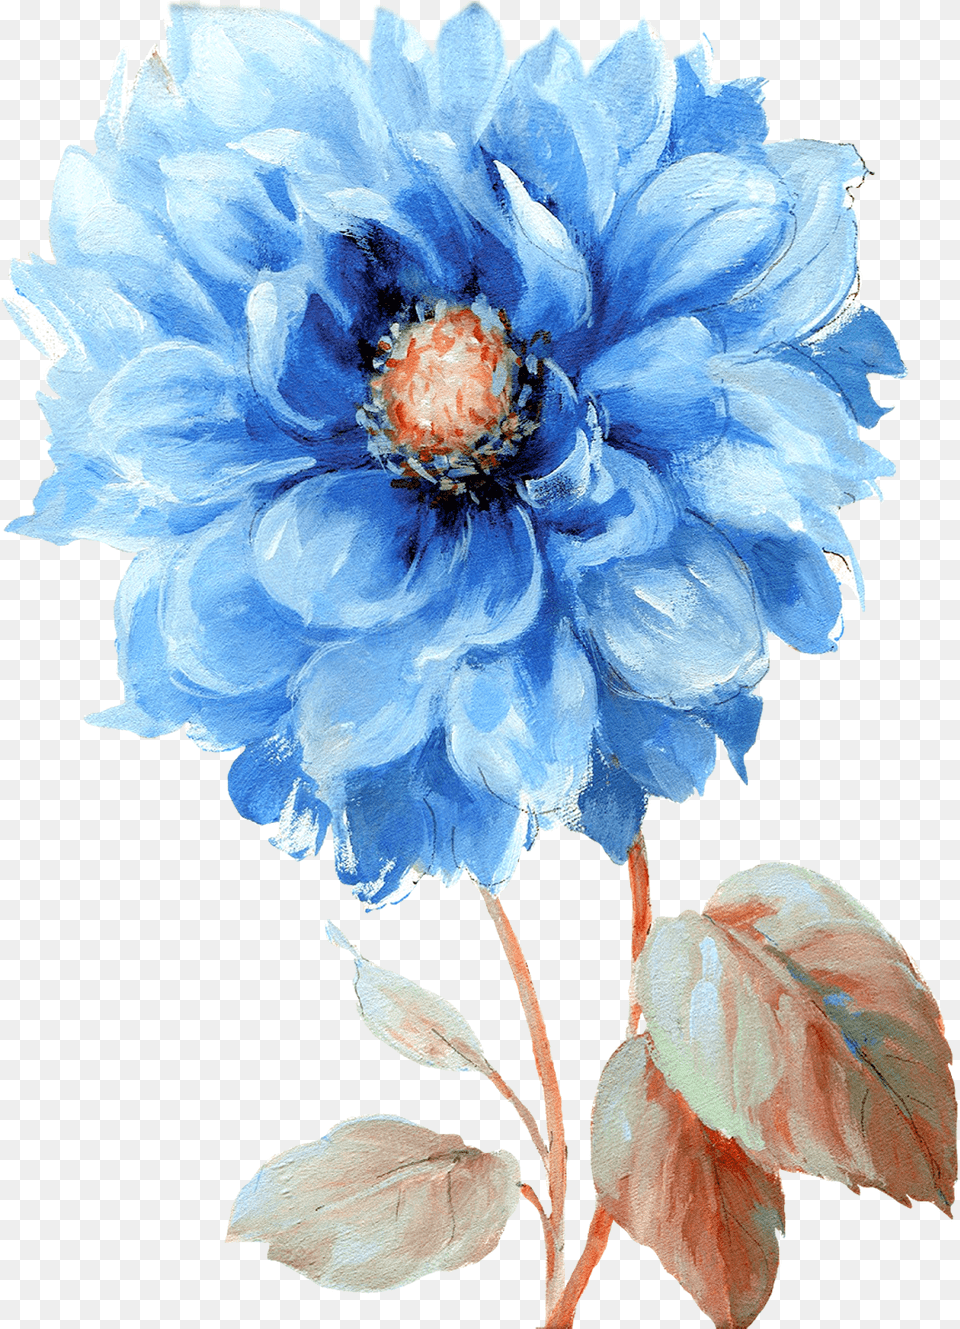 Watercolor Flowers Royal Blue Flower Painting By Cuadros En Tela Para Sala, Anemone, Dahlia, Plant, Petal Free Transparent Png